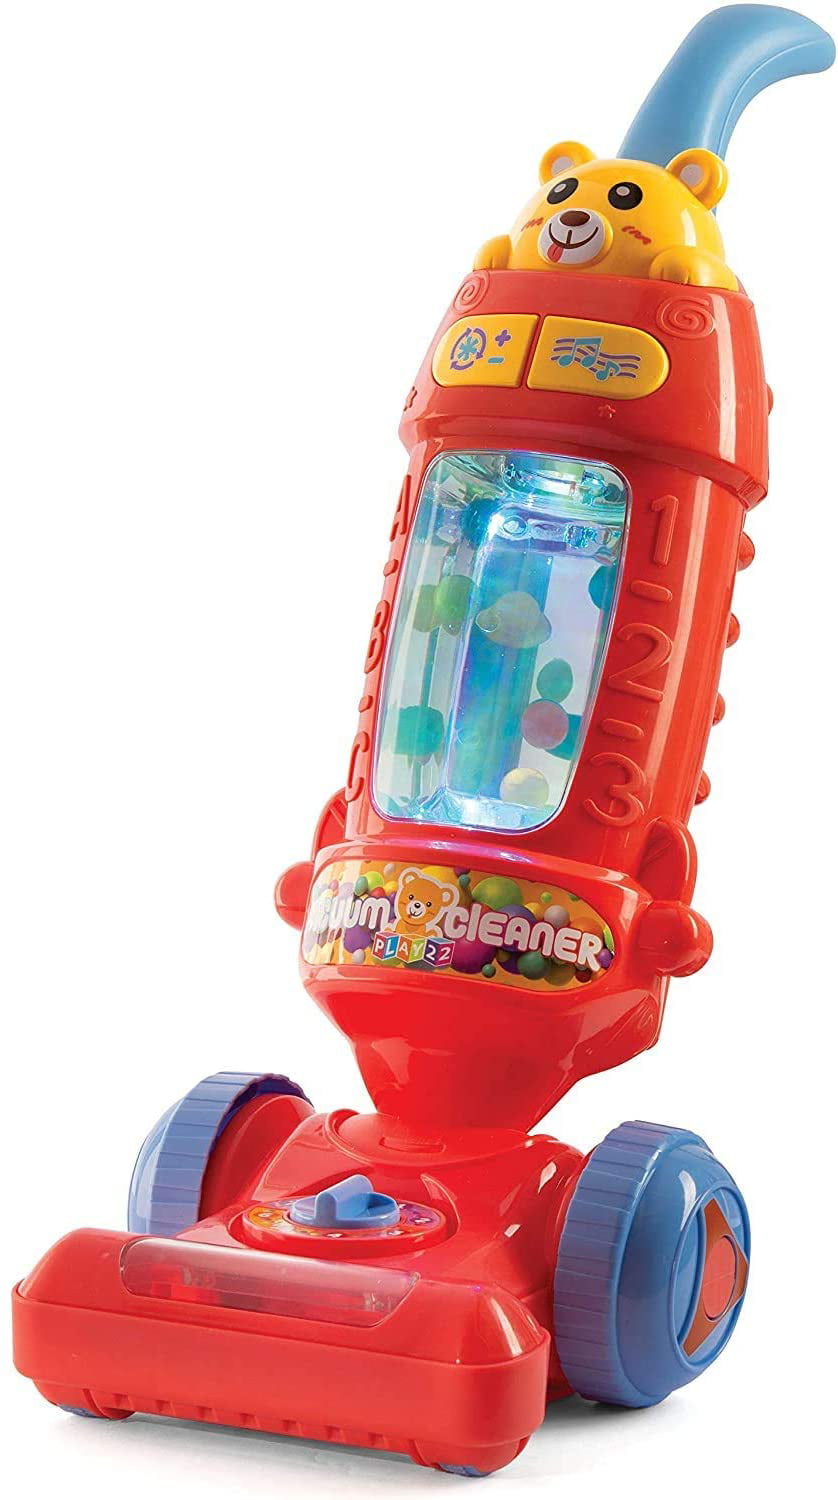 Plastic Simulation Children Appliance Play Toy Light Sound Blue Vacuum Cleaner 